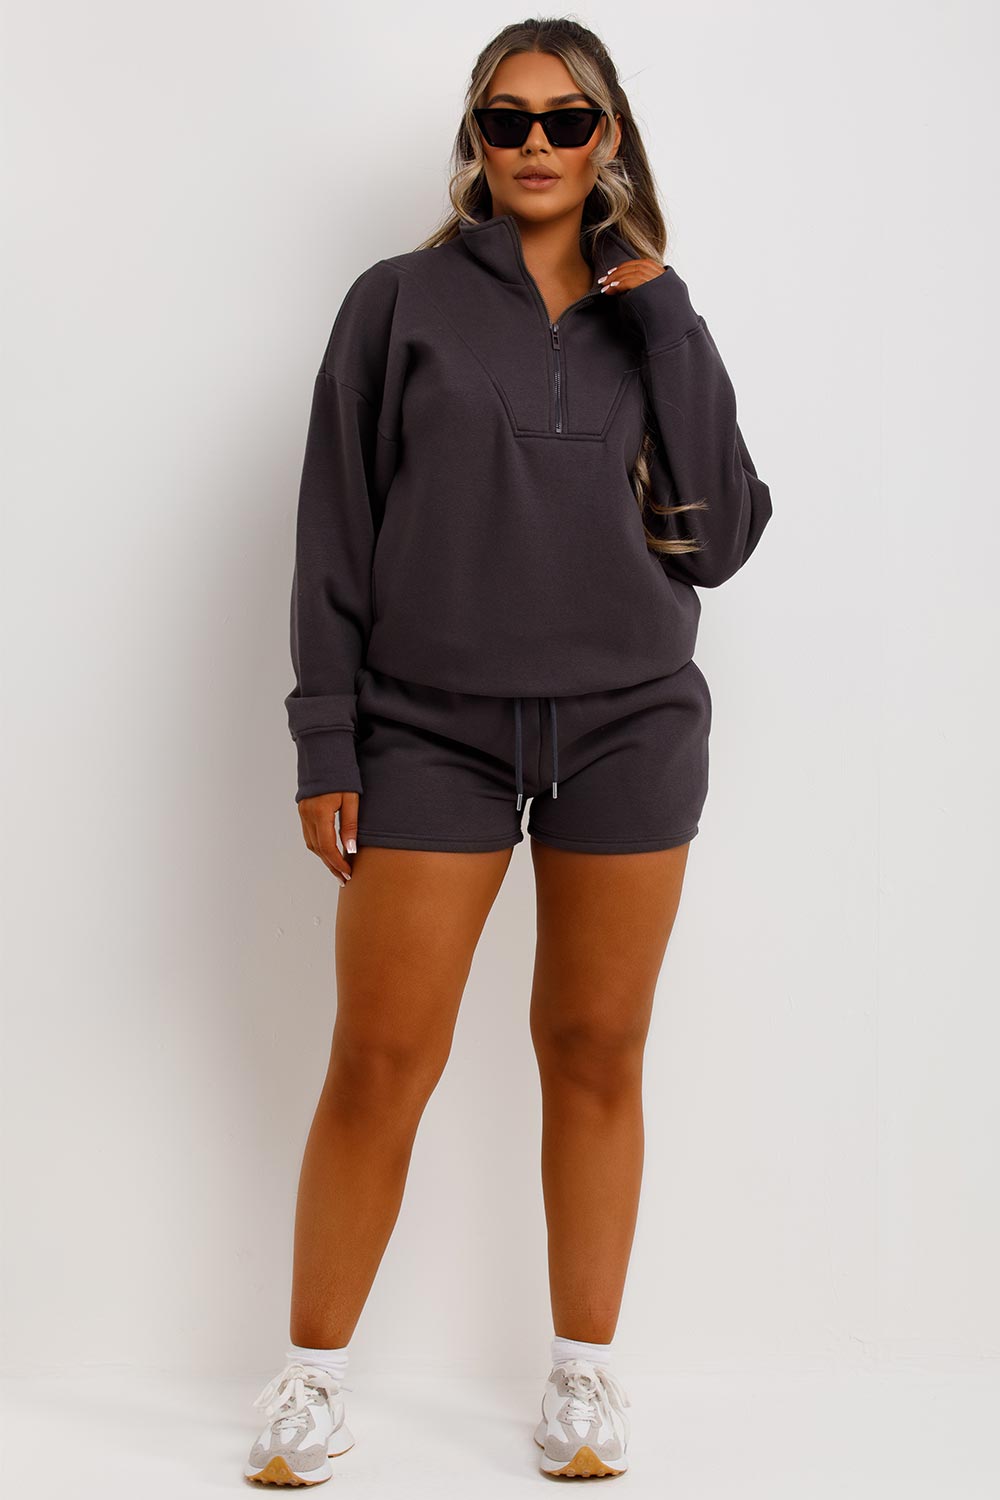 womens charcoal half zip sweatshirt and shorts tracksuit set